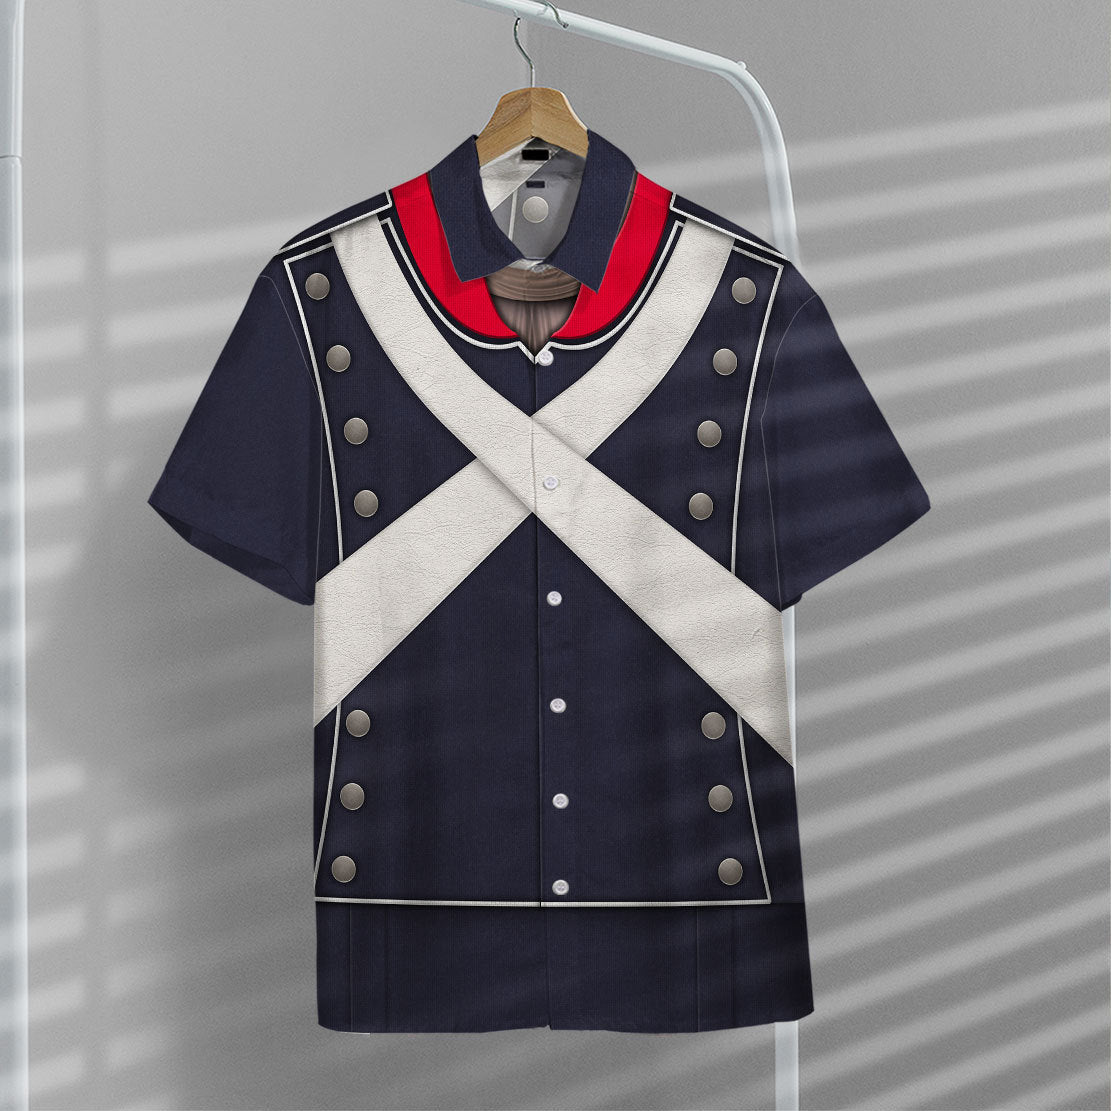 French Light Infantry Custom Hawaii Shirt 11